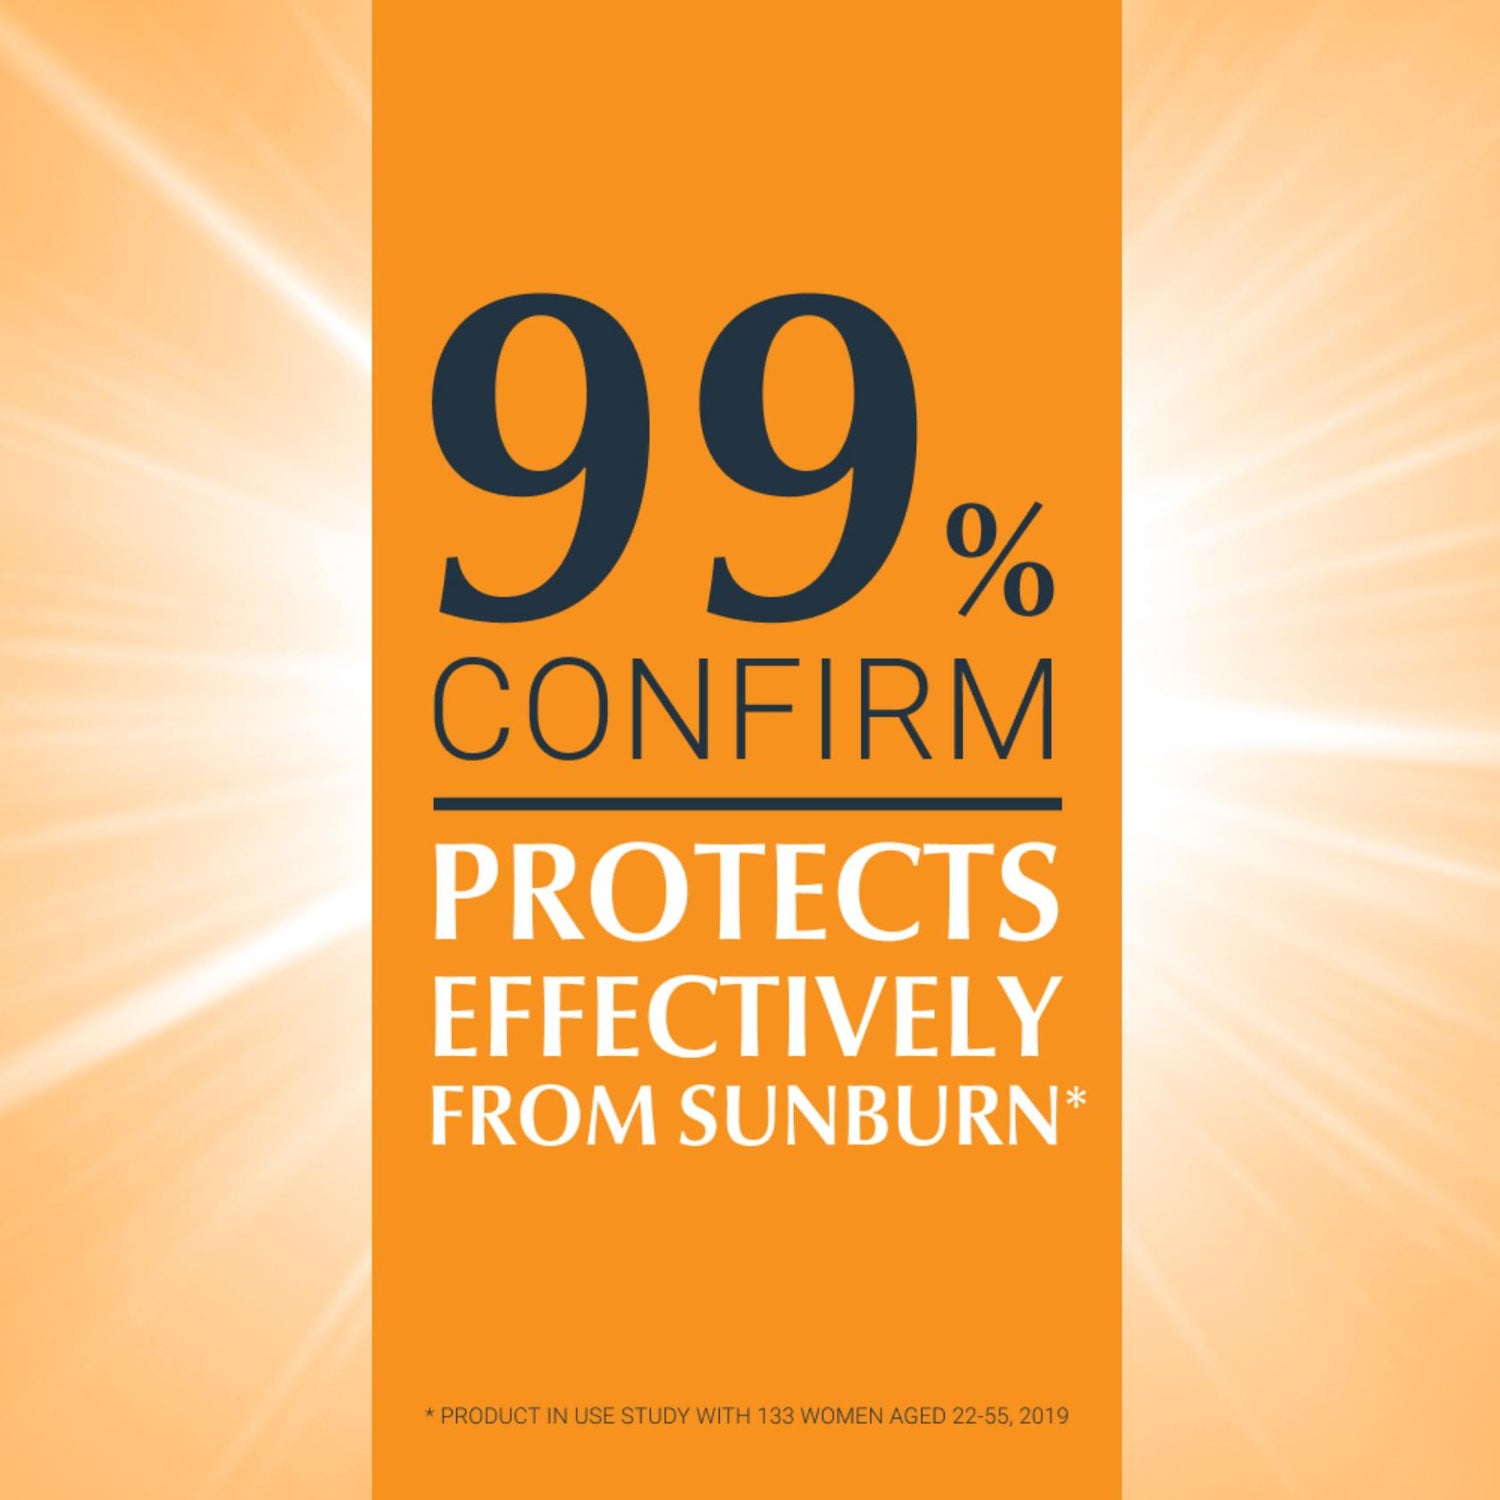 Eucerin Creme Solar-Gel Proteção Alergia SPF50 150ml